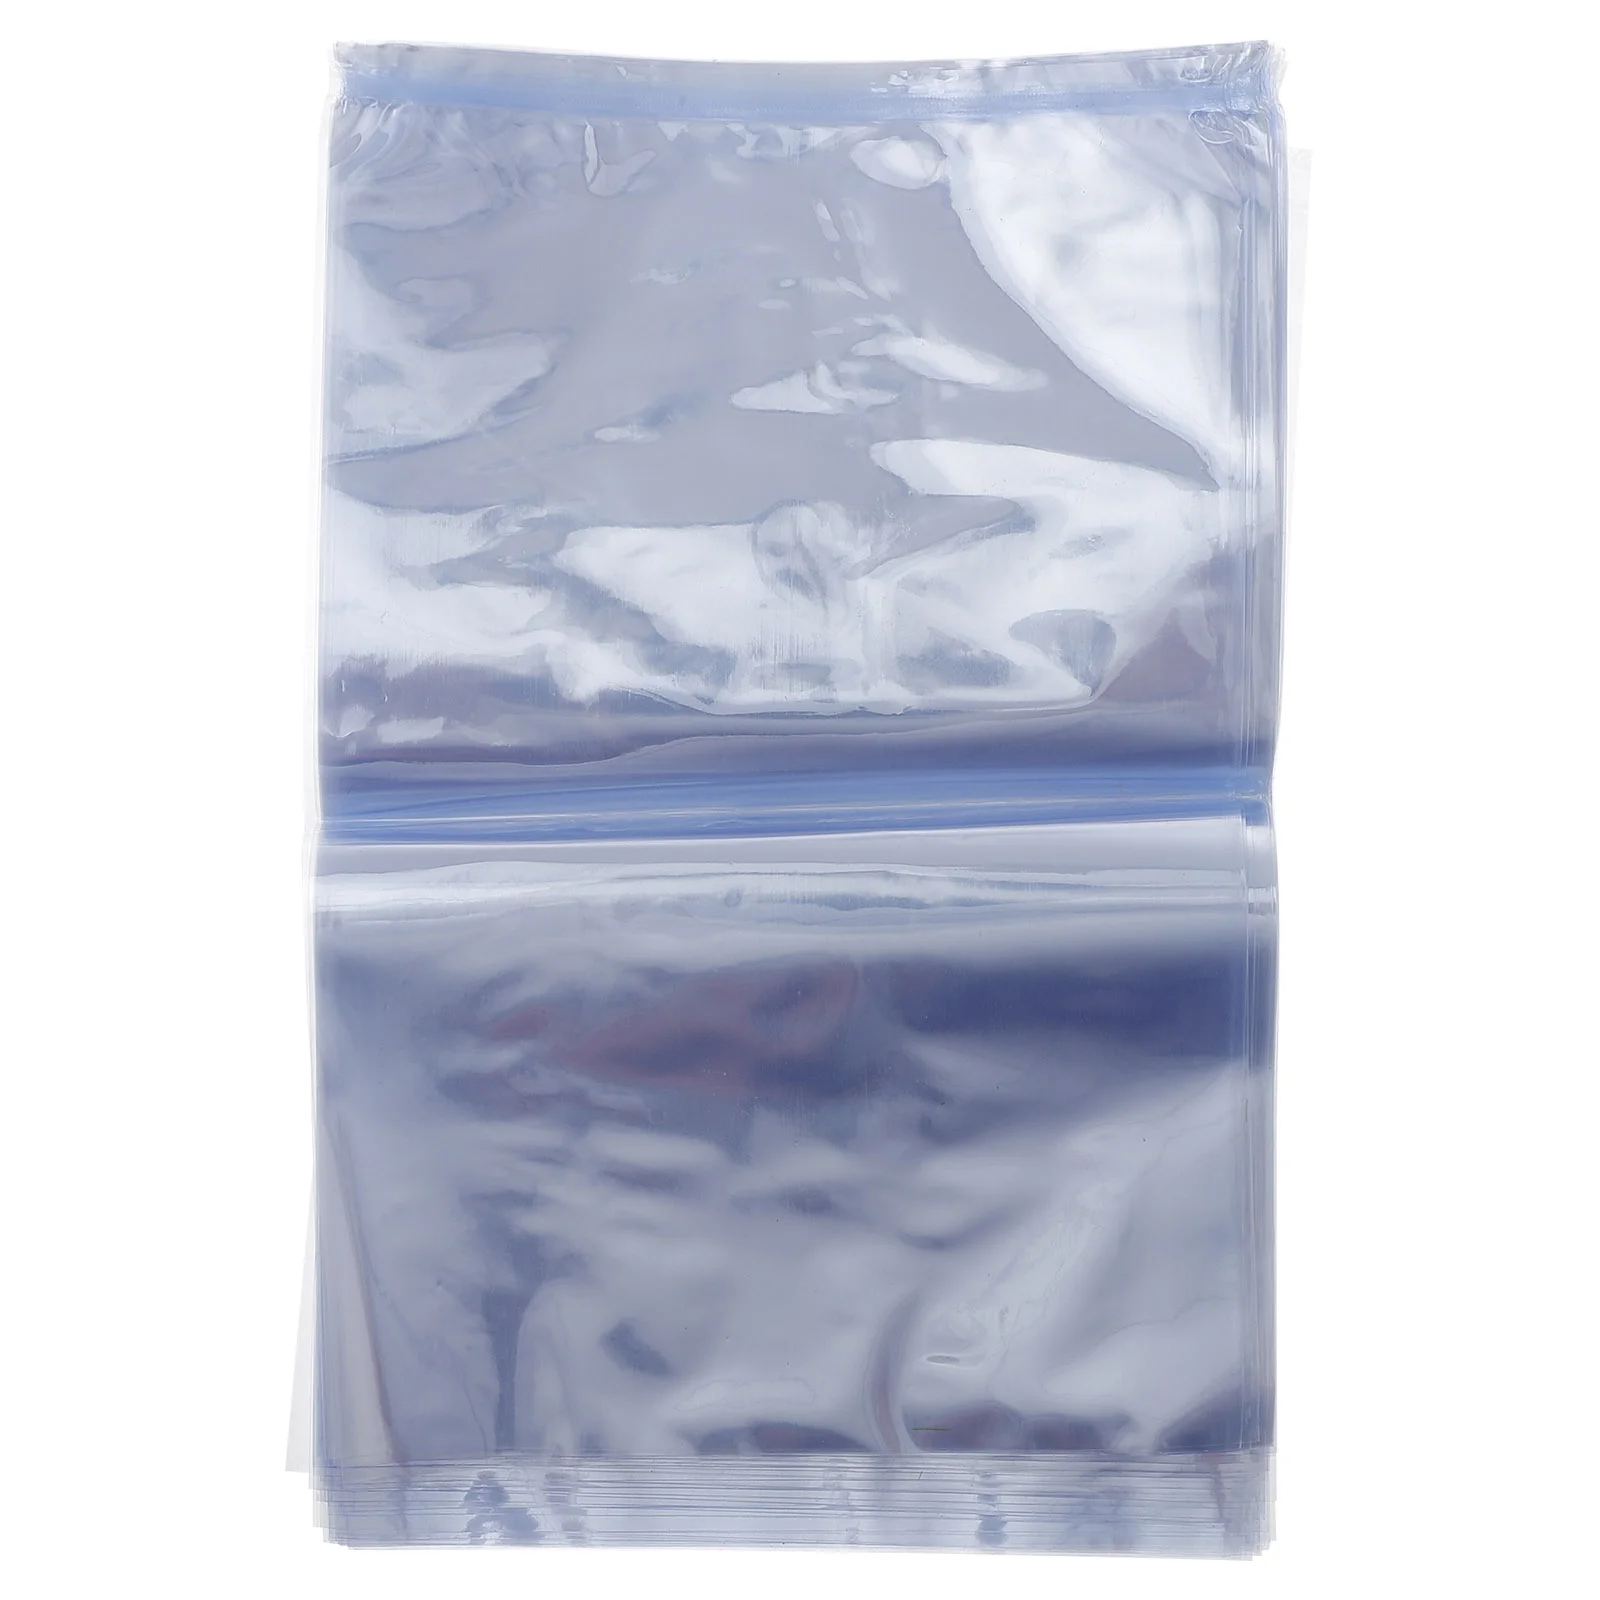 

100 PCS Shrink Wraps for Bottles Shrink Wrap Bags Bouquet Wrapping Paper Cellophane Wrap Roll Shrink Film Bags Heat Shrink Wrap